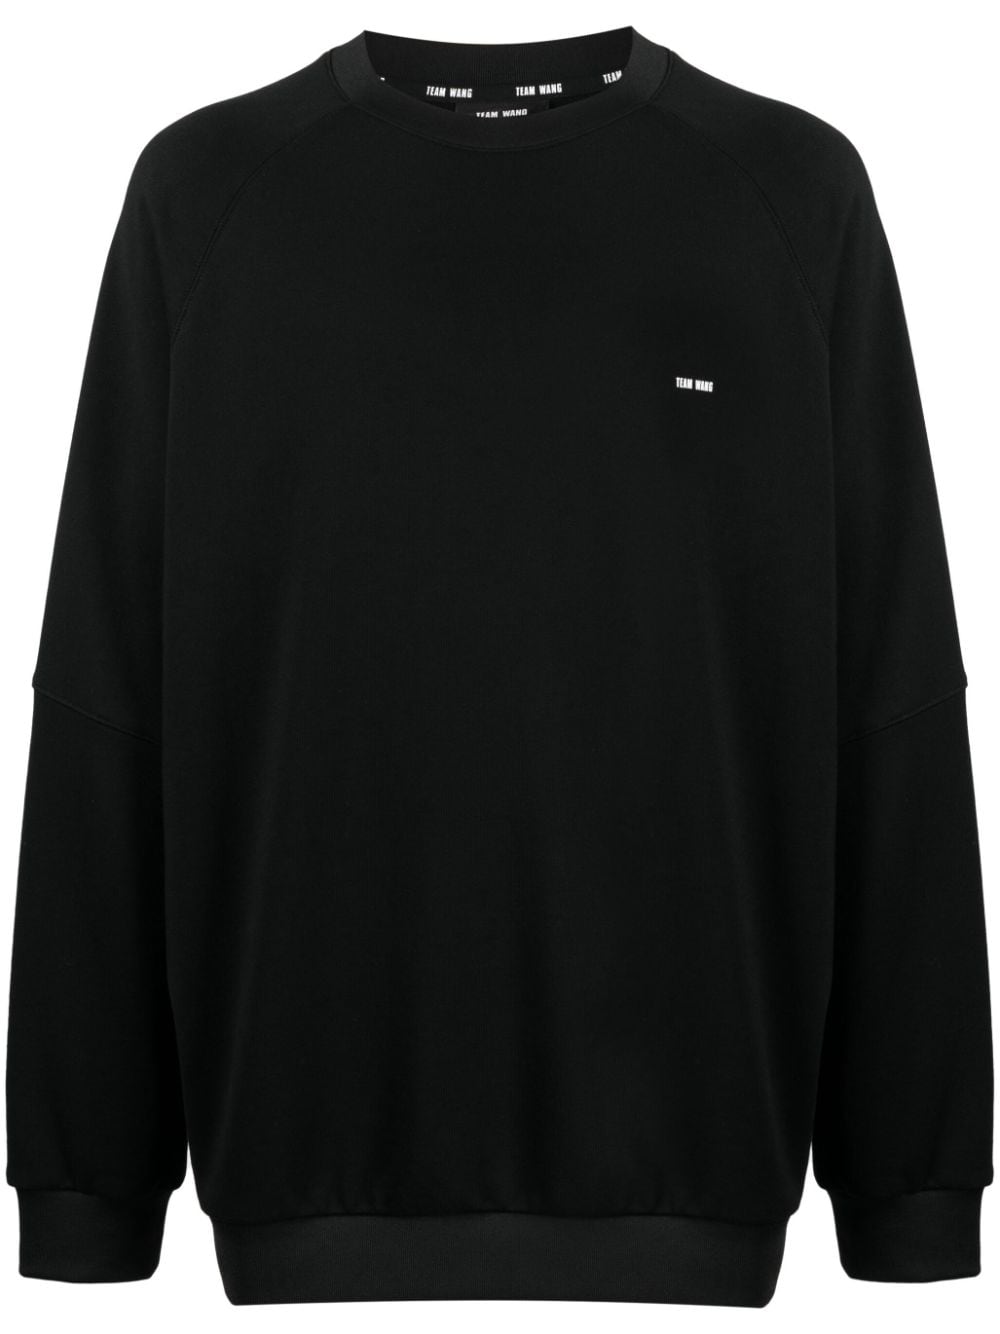 TEAM WANG design logo-embroidered cotton sweatshirt - Black